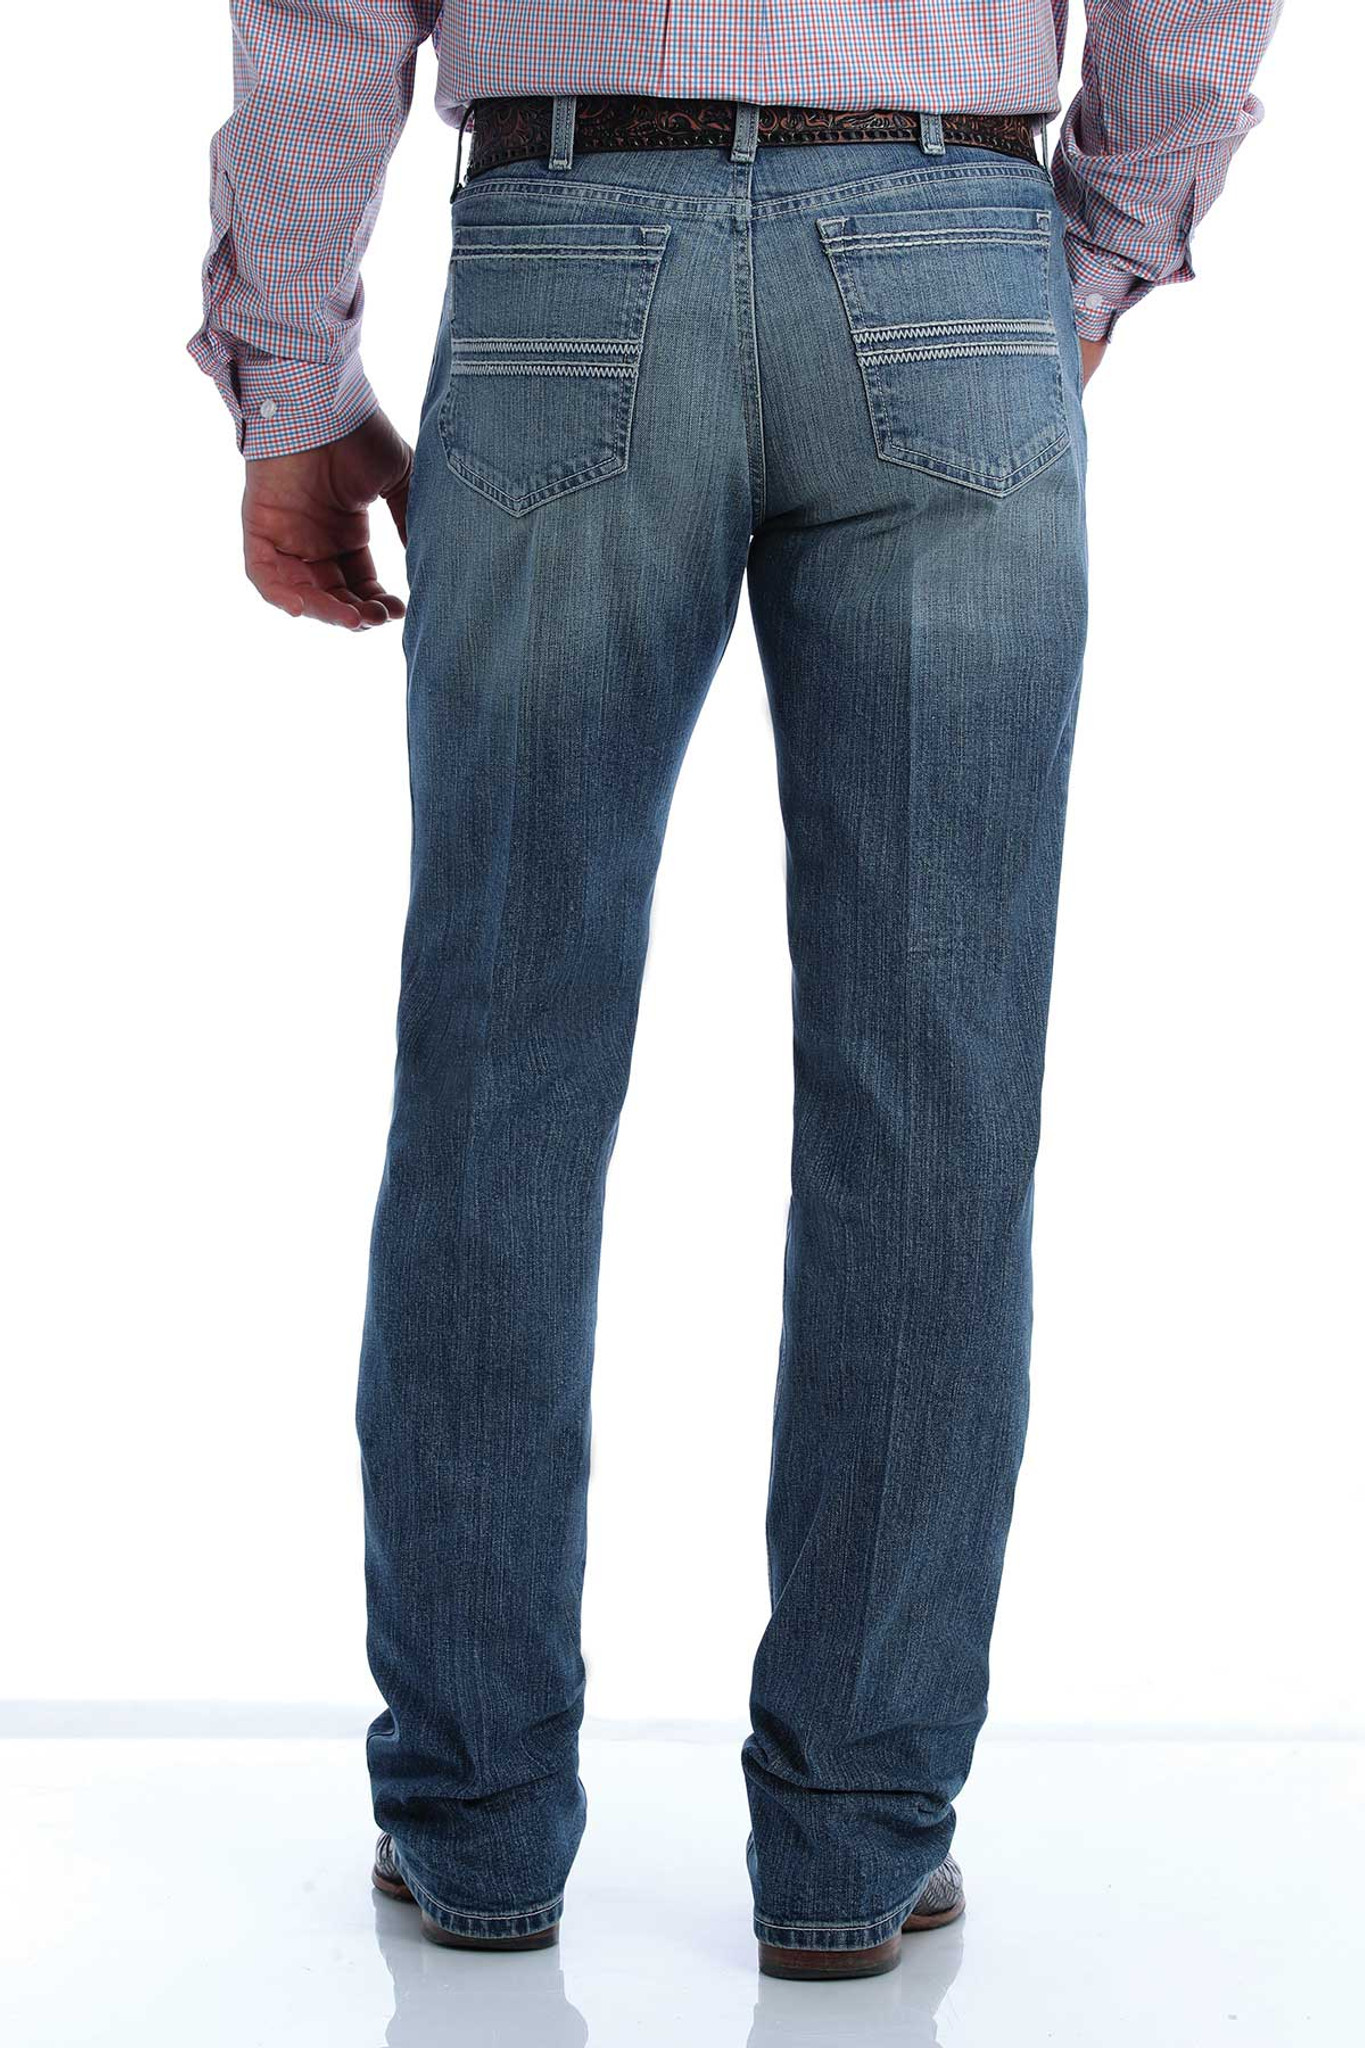 Cinch Silver Label Slim Fit Men's Jeans